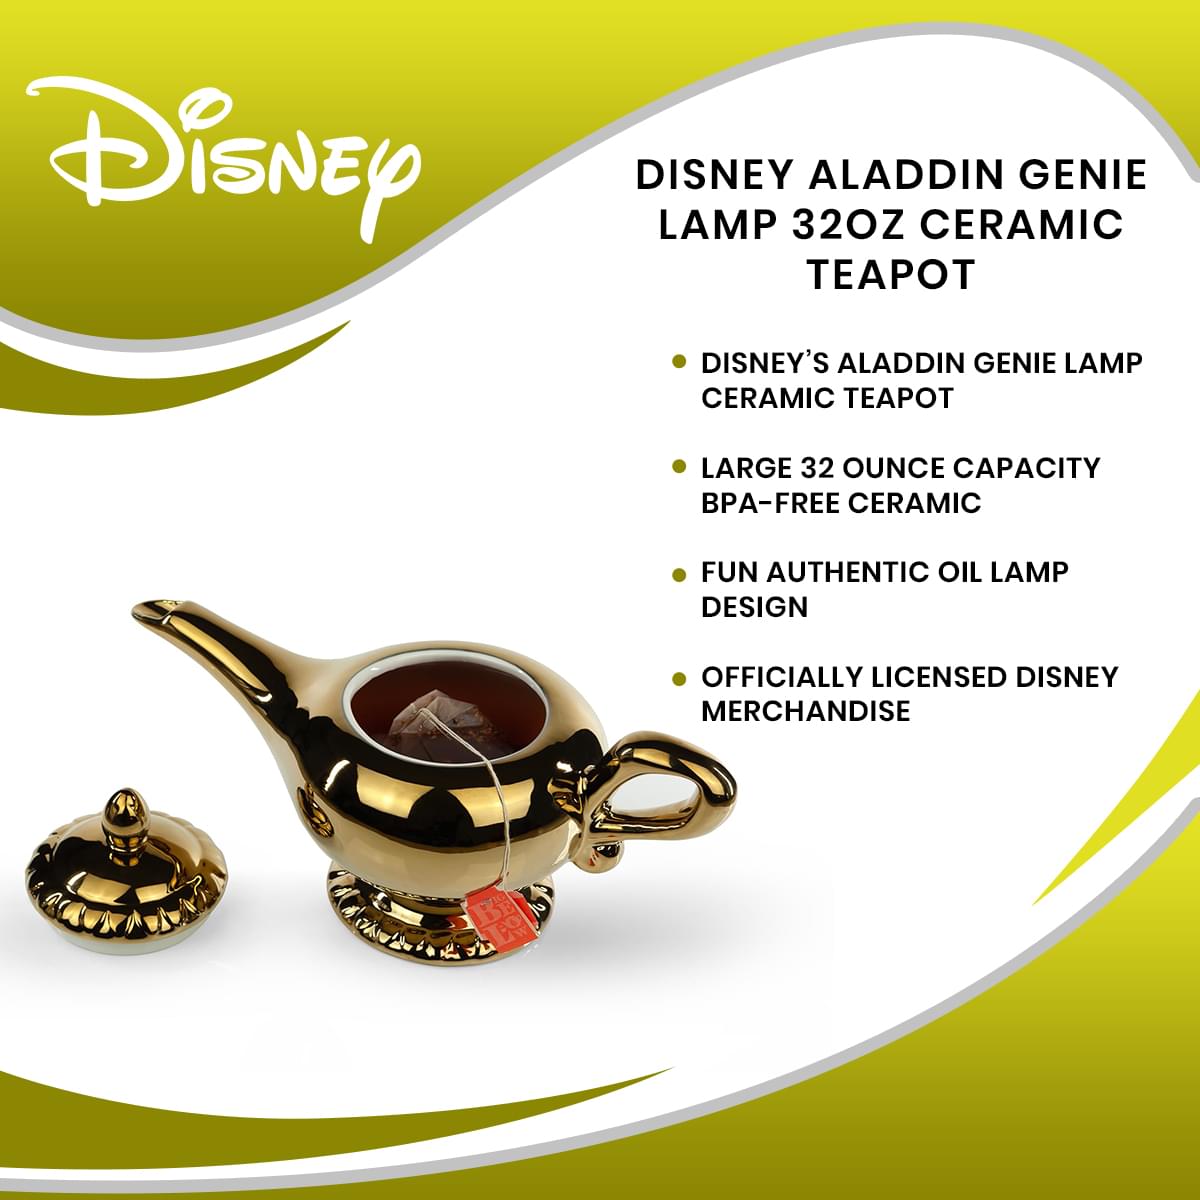 Disney Aladdin Genie Lamp 32oz Ceramic Teapot